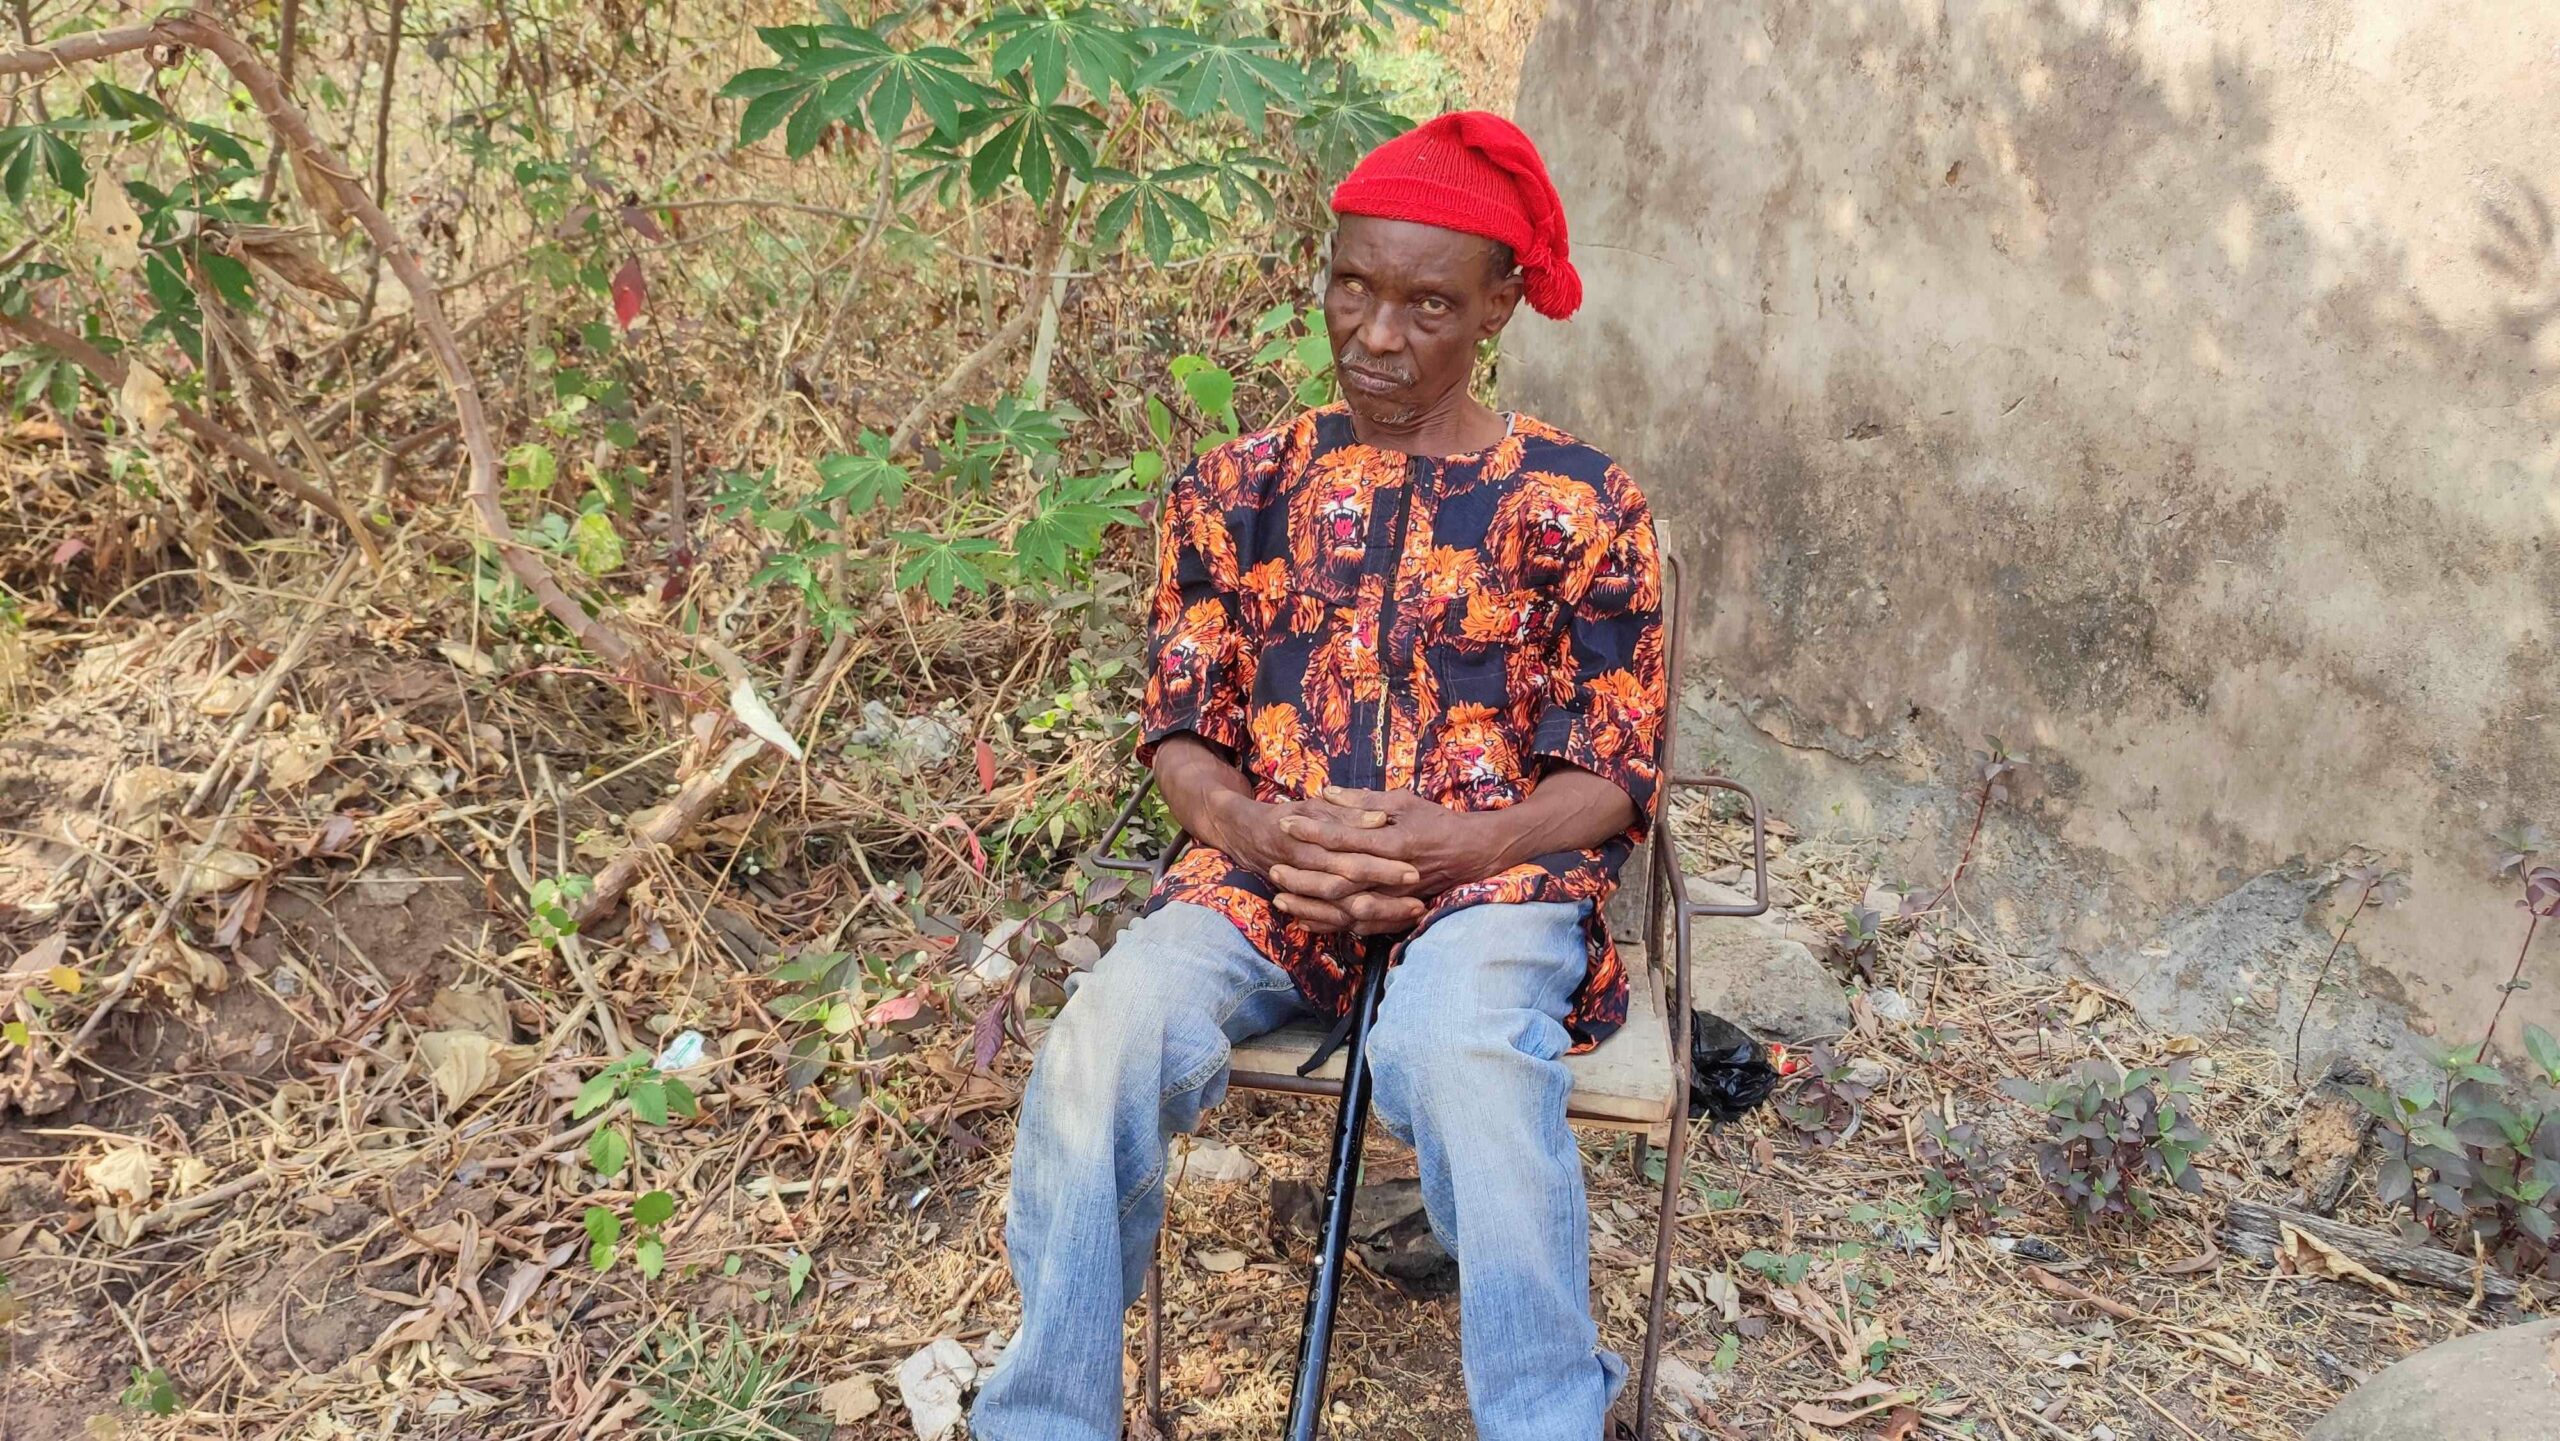 An elder in the community, Boniface Okafor